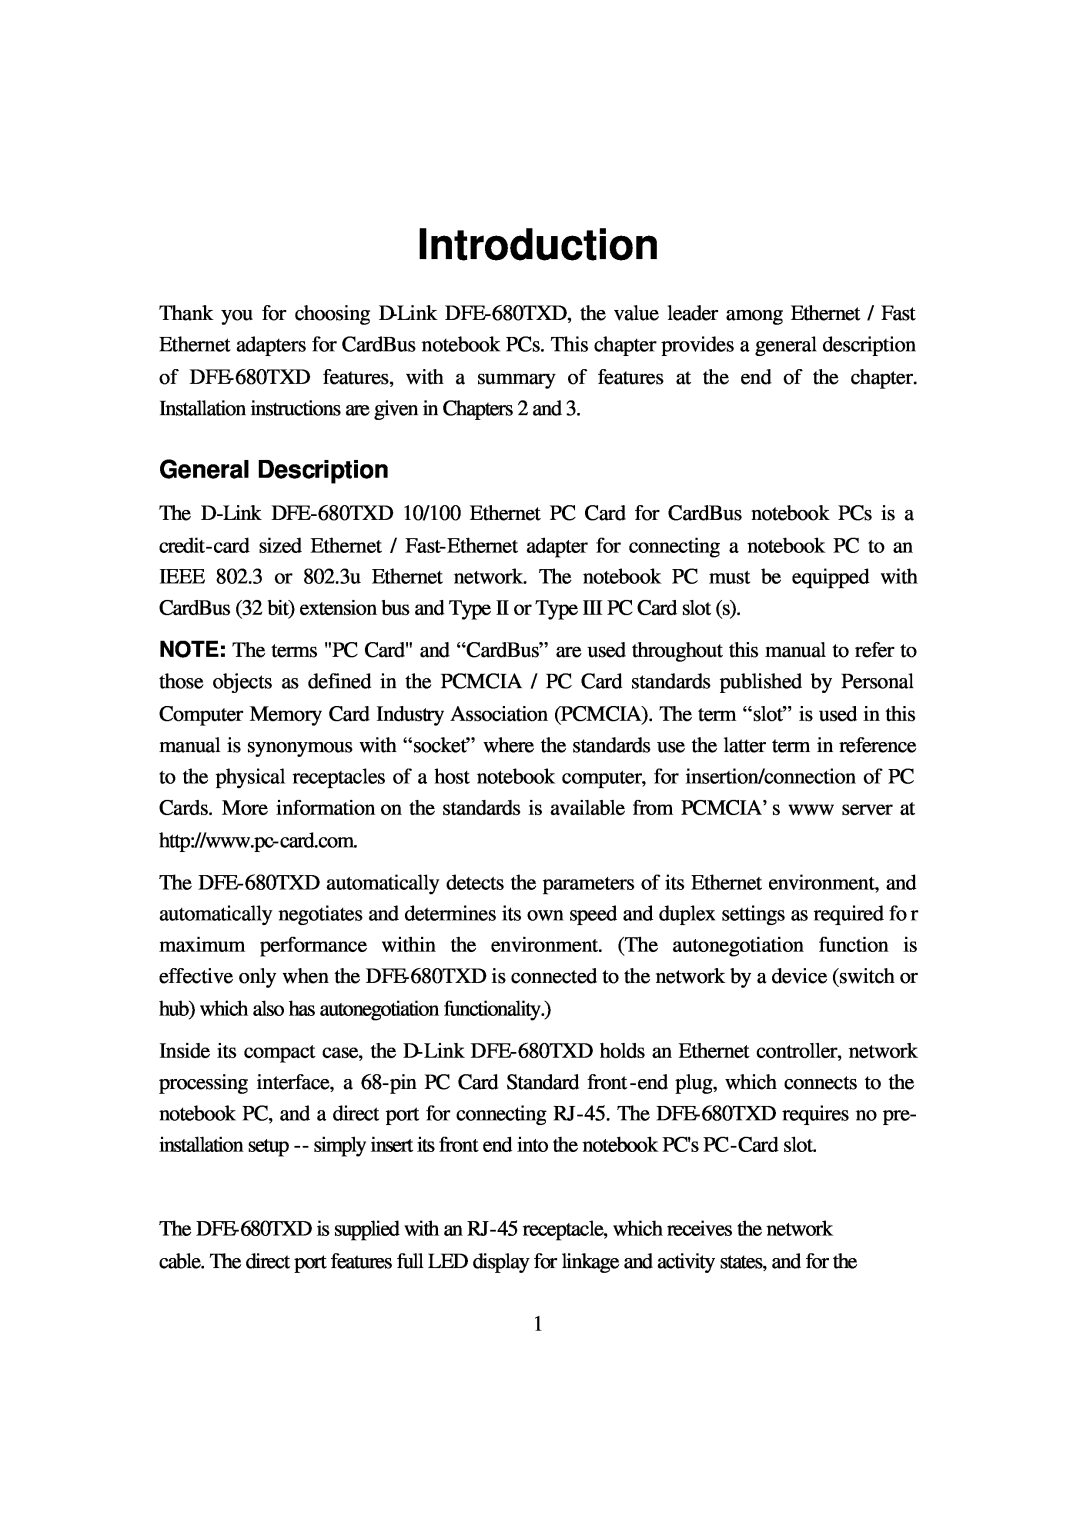 D-Link DFE-680TXD manual Introduction, General Description 